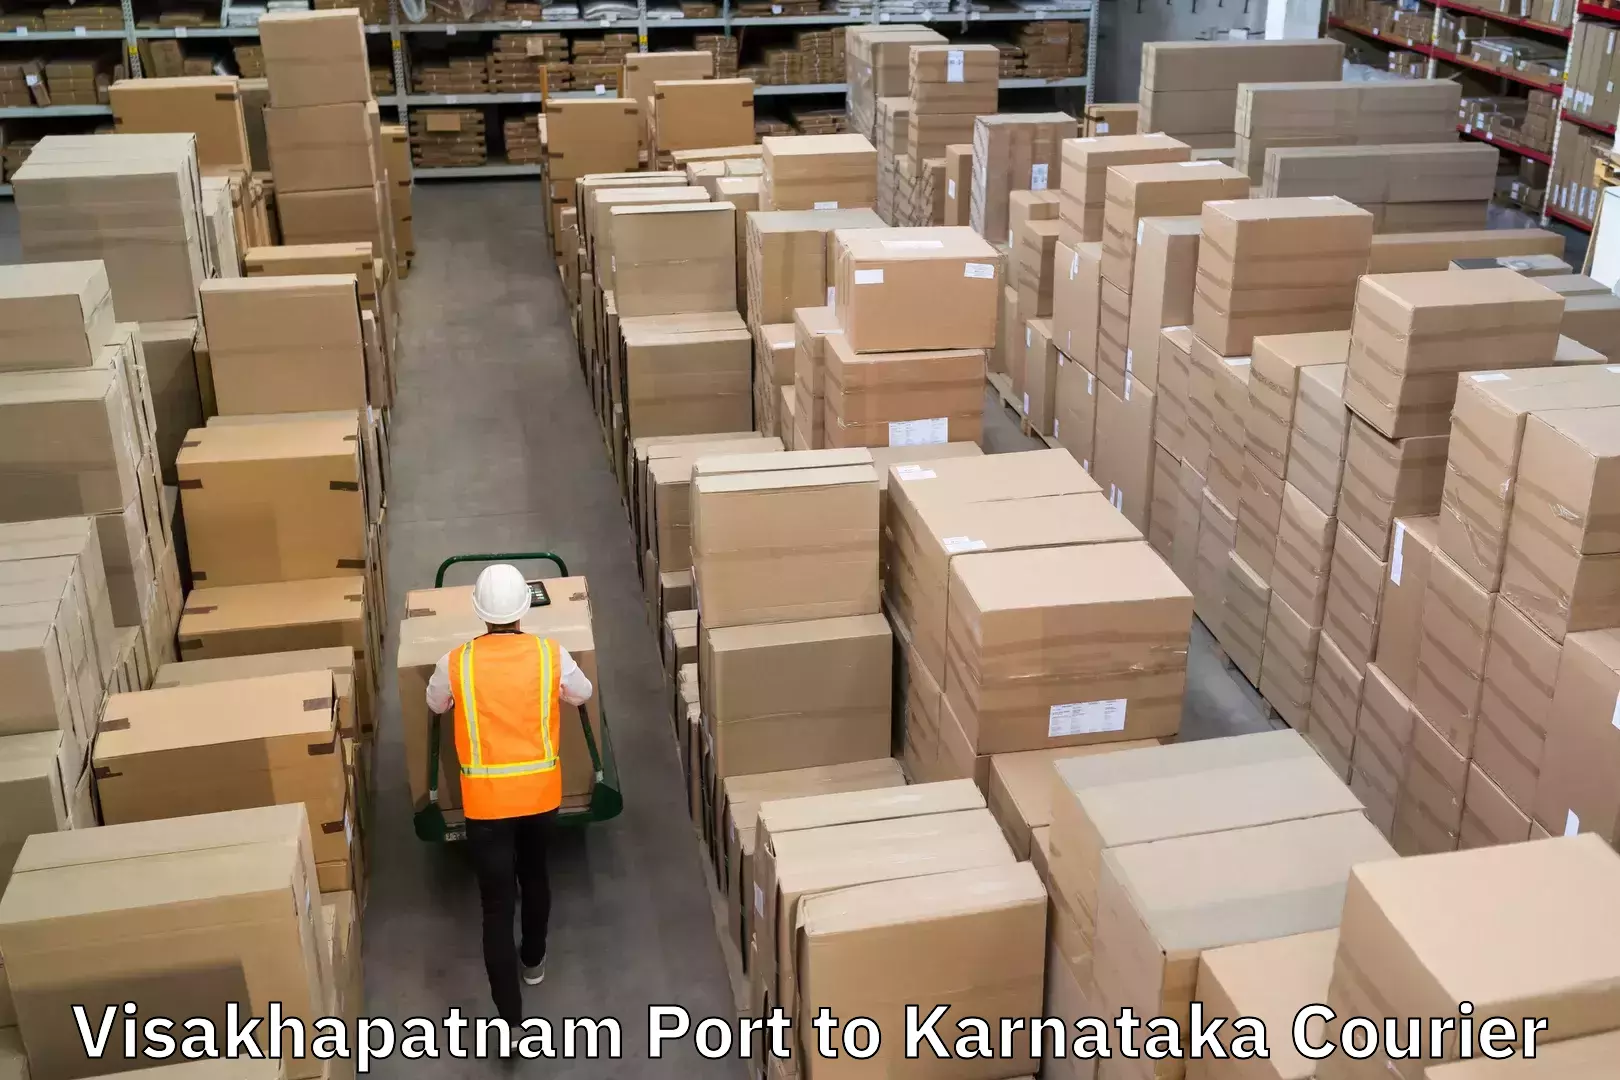 Global logistics network Visakhapatnam Port to Karnataka